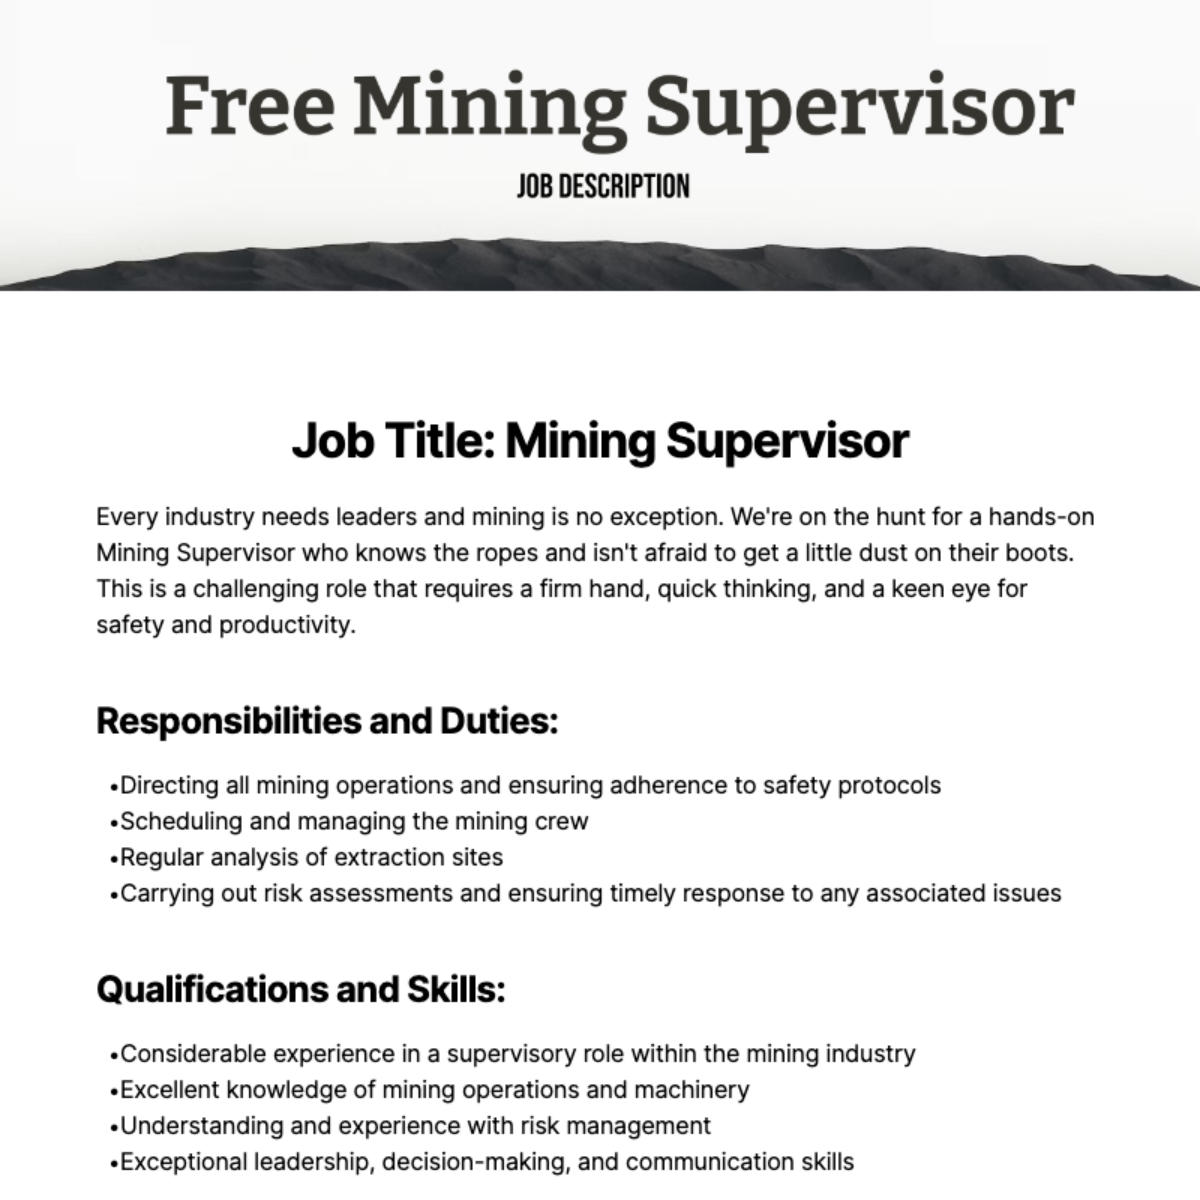 Free Mining Supervisor Job Description Template